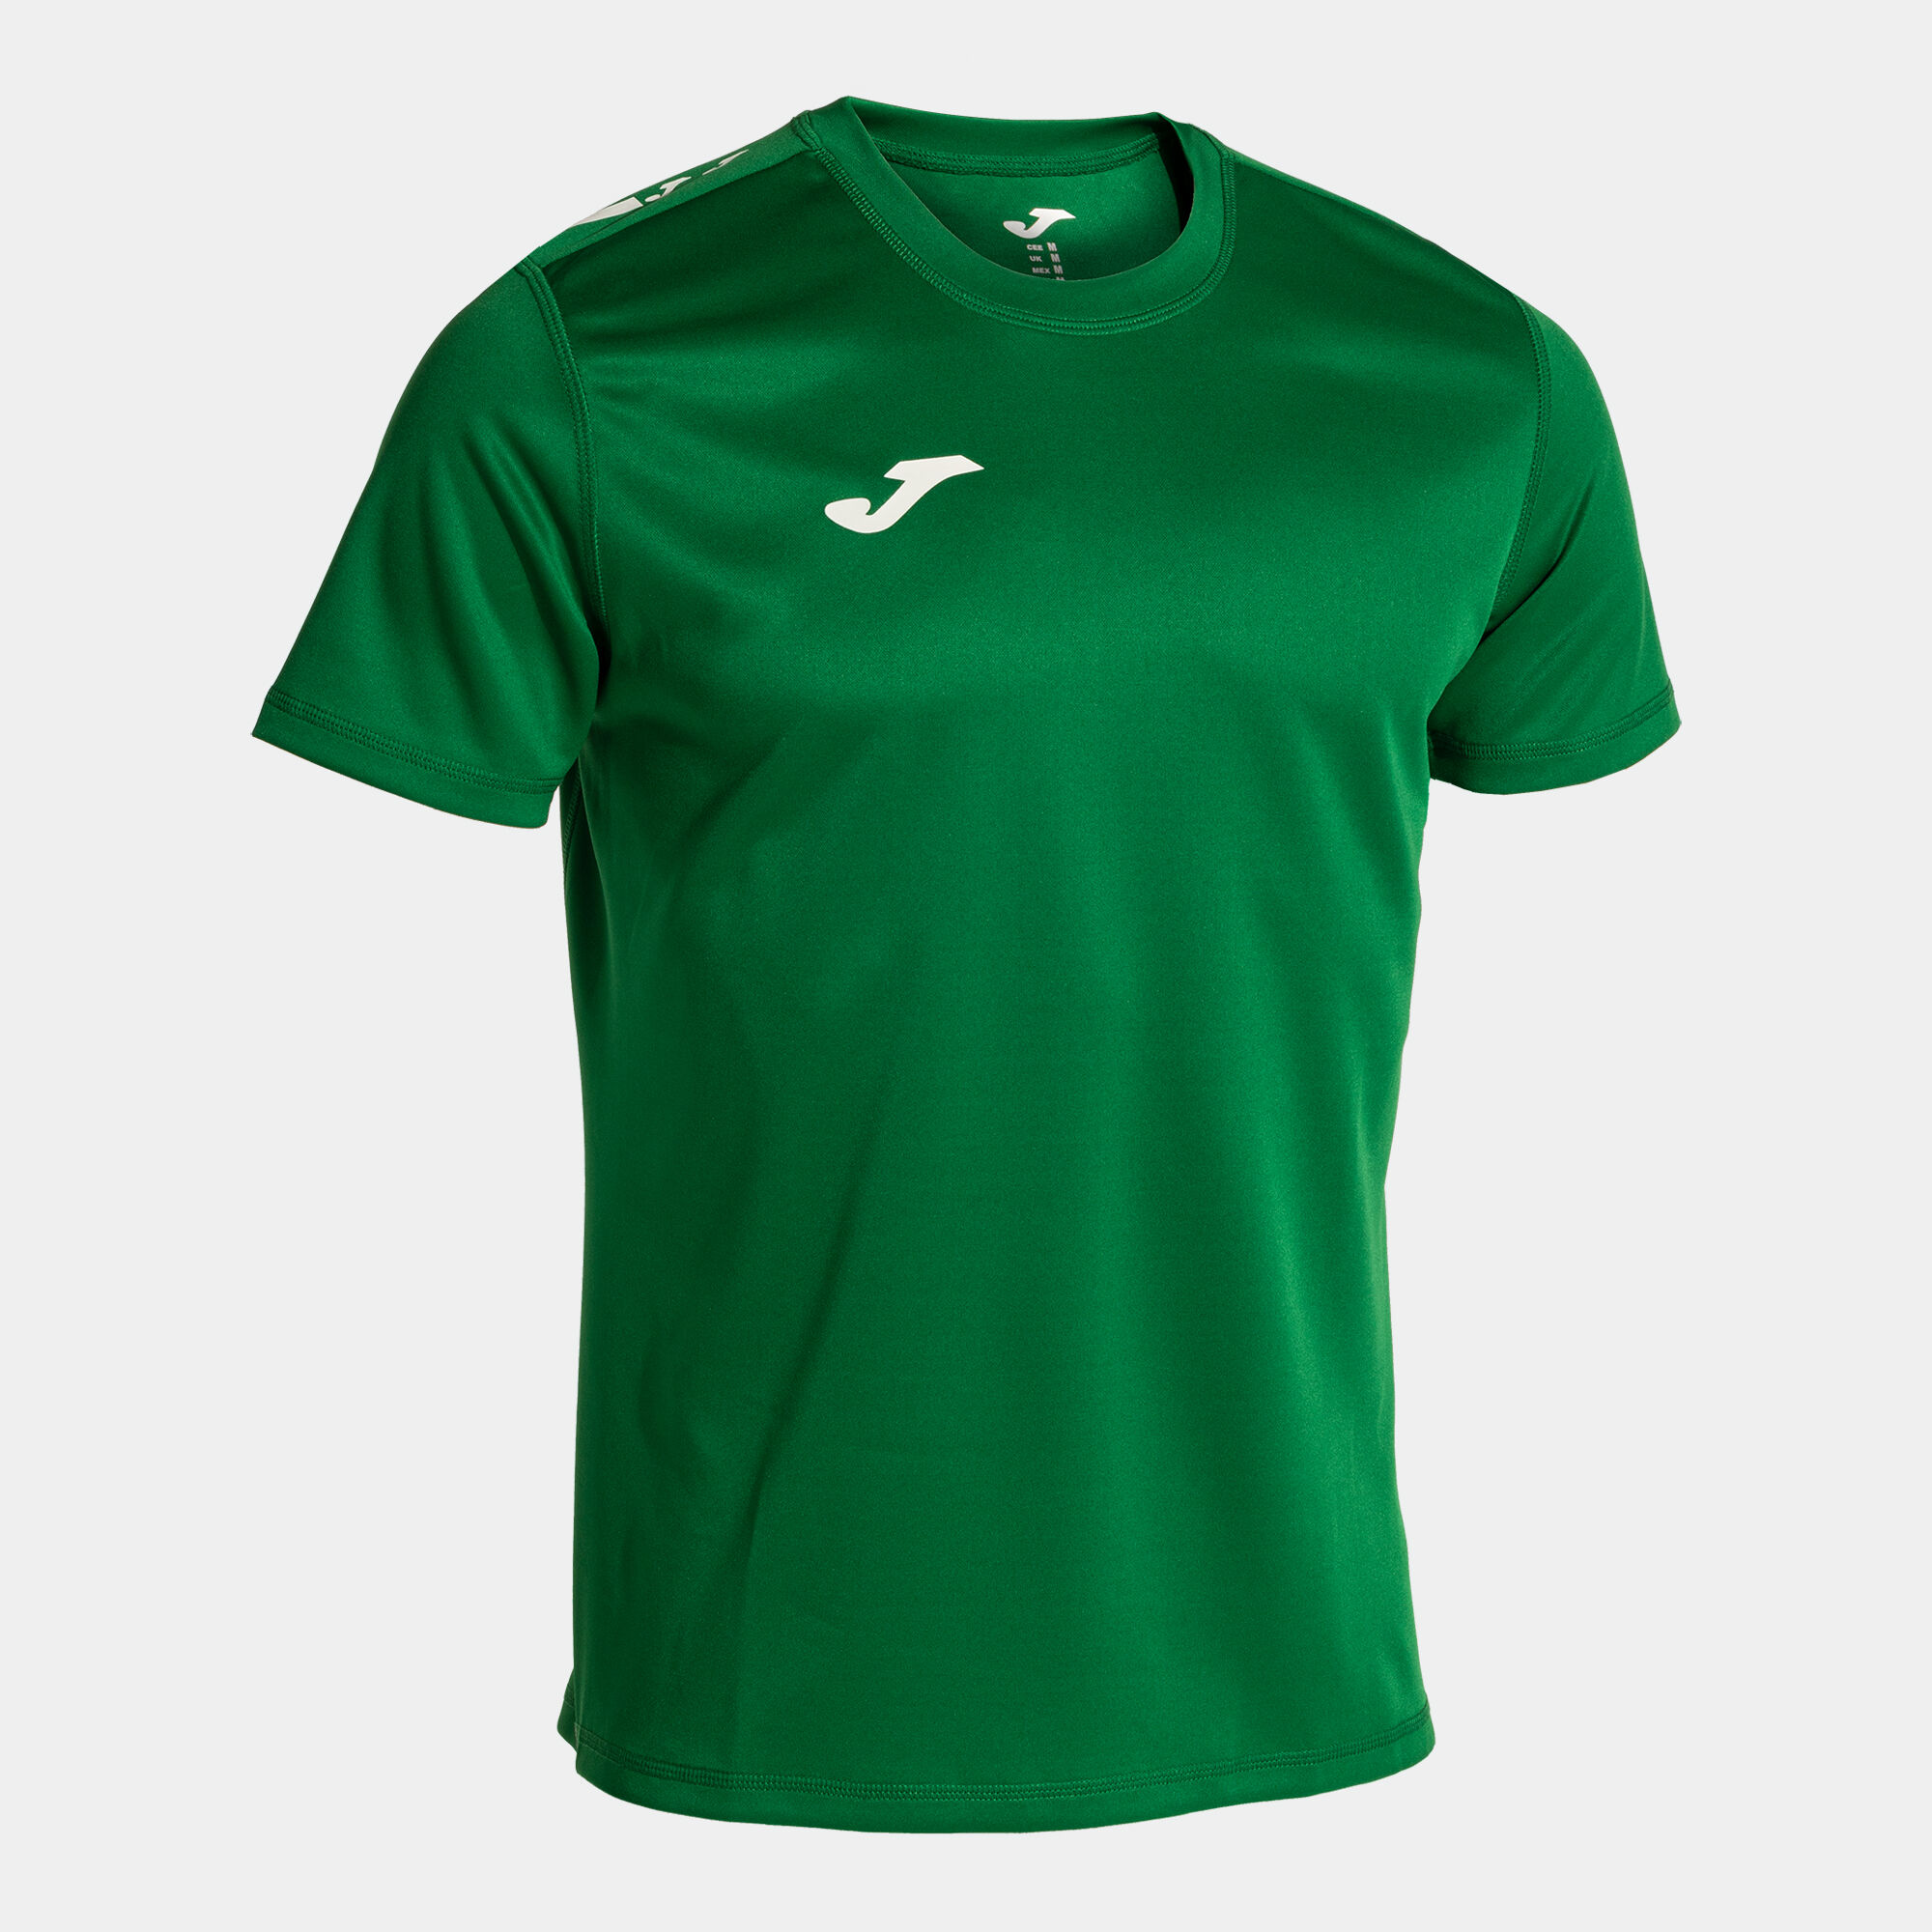 Shirt short sleeve man Olimpiada rugby green